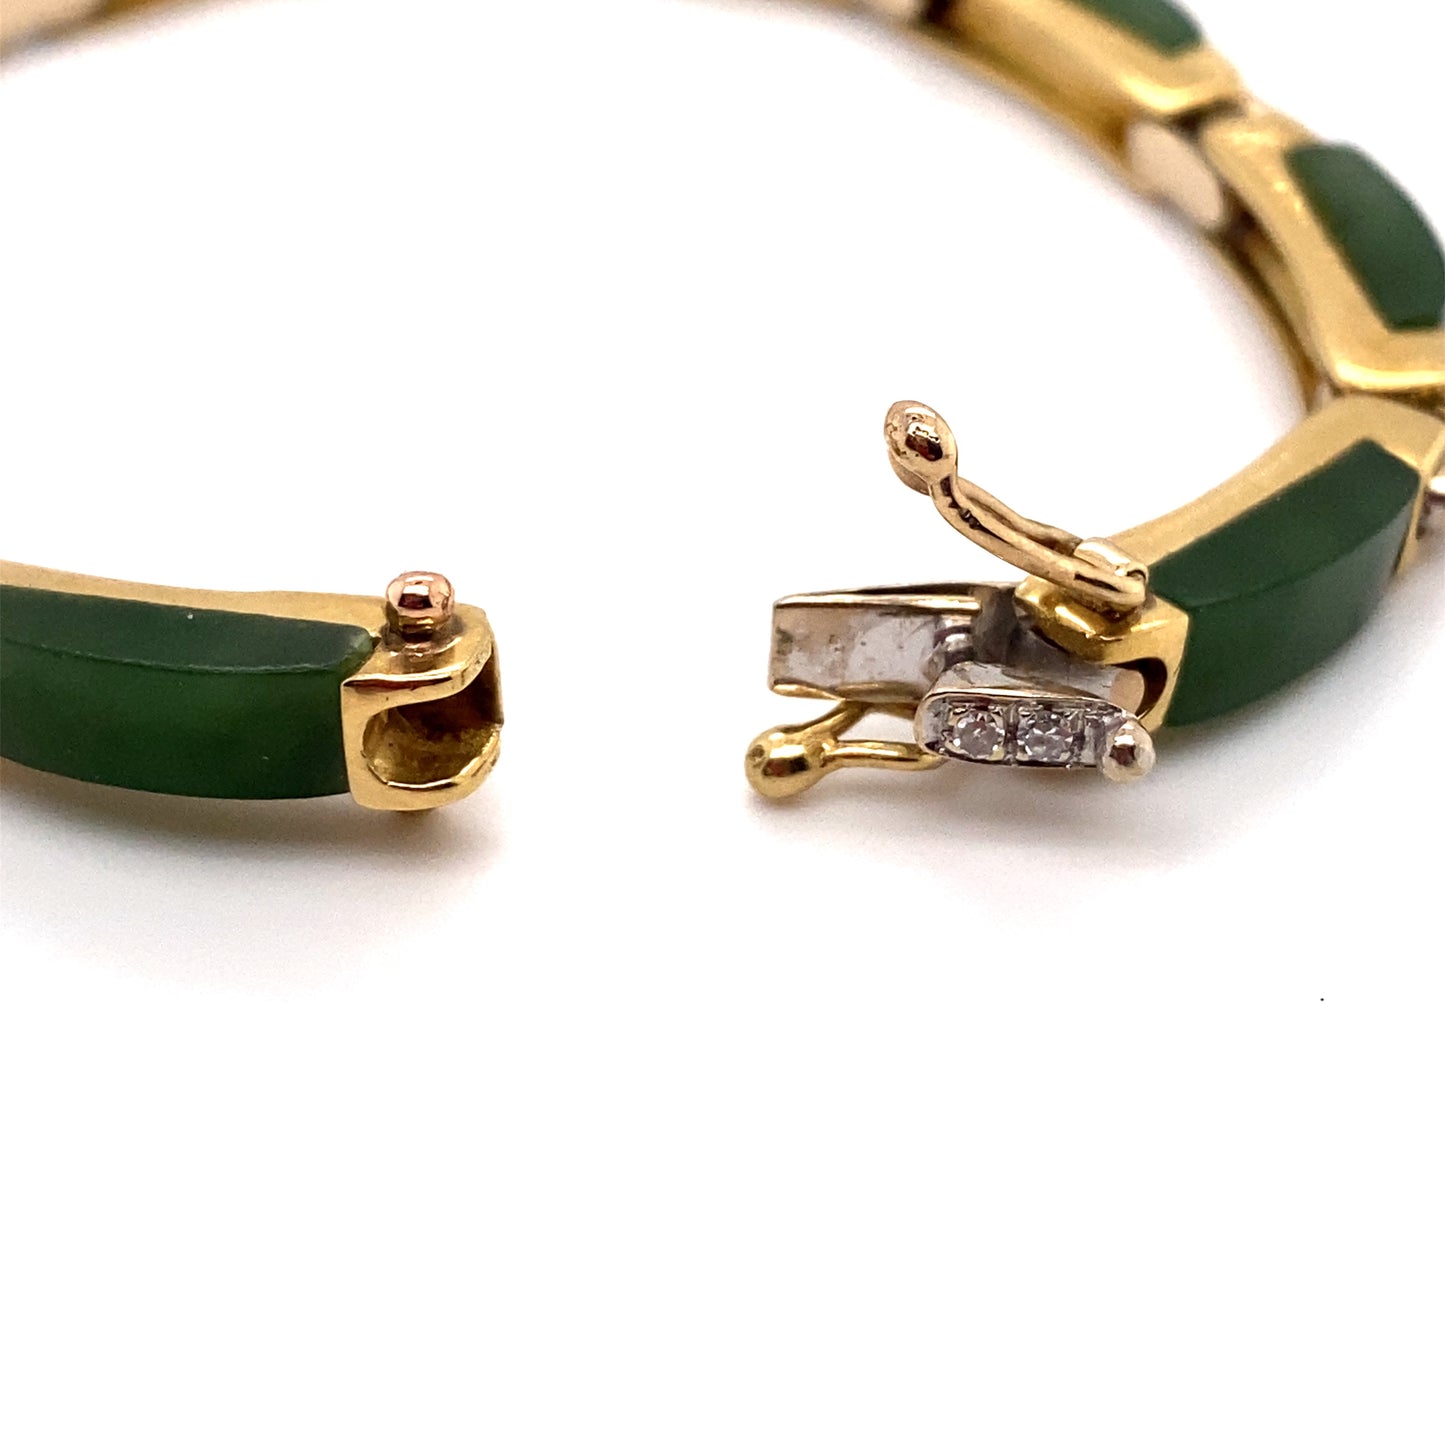 Circa 1970 Retro Jade and Diamond Link Bracelet in 18K Gold